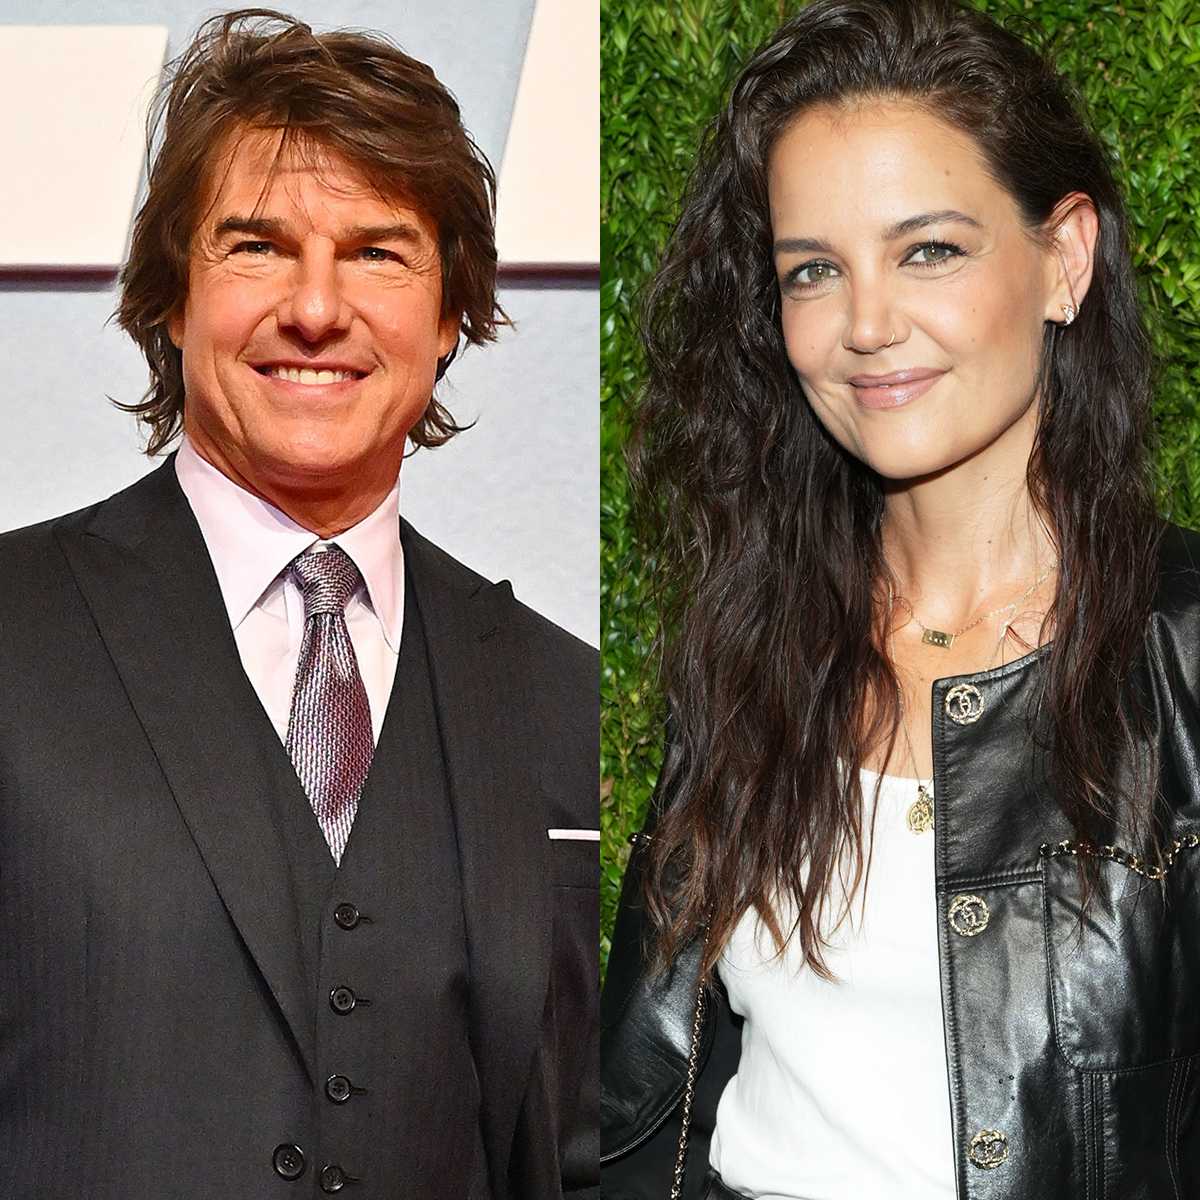 Tom Cruise & Katie Holmes’ Daughter Suri Reveals Her College Plans